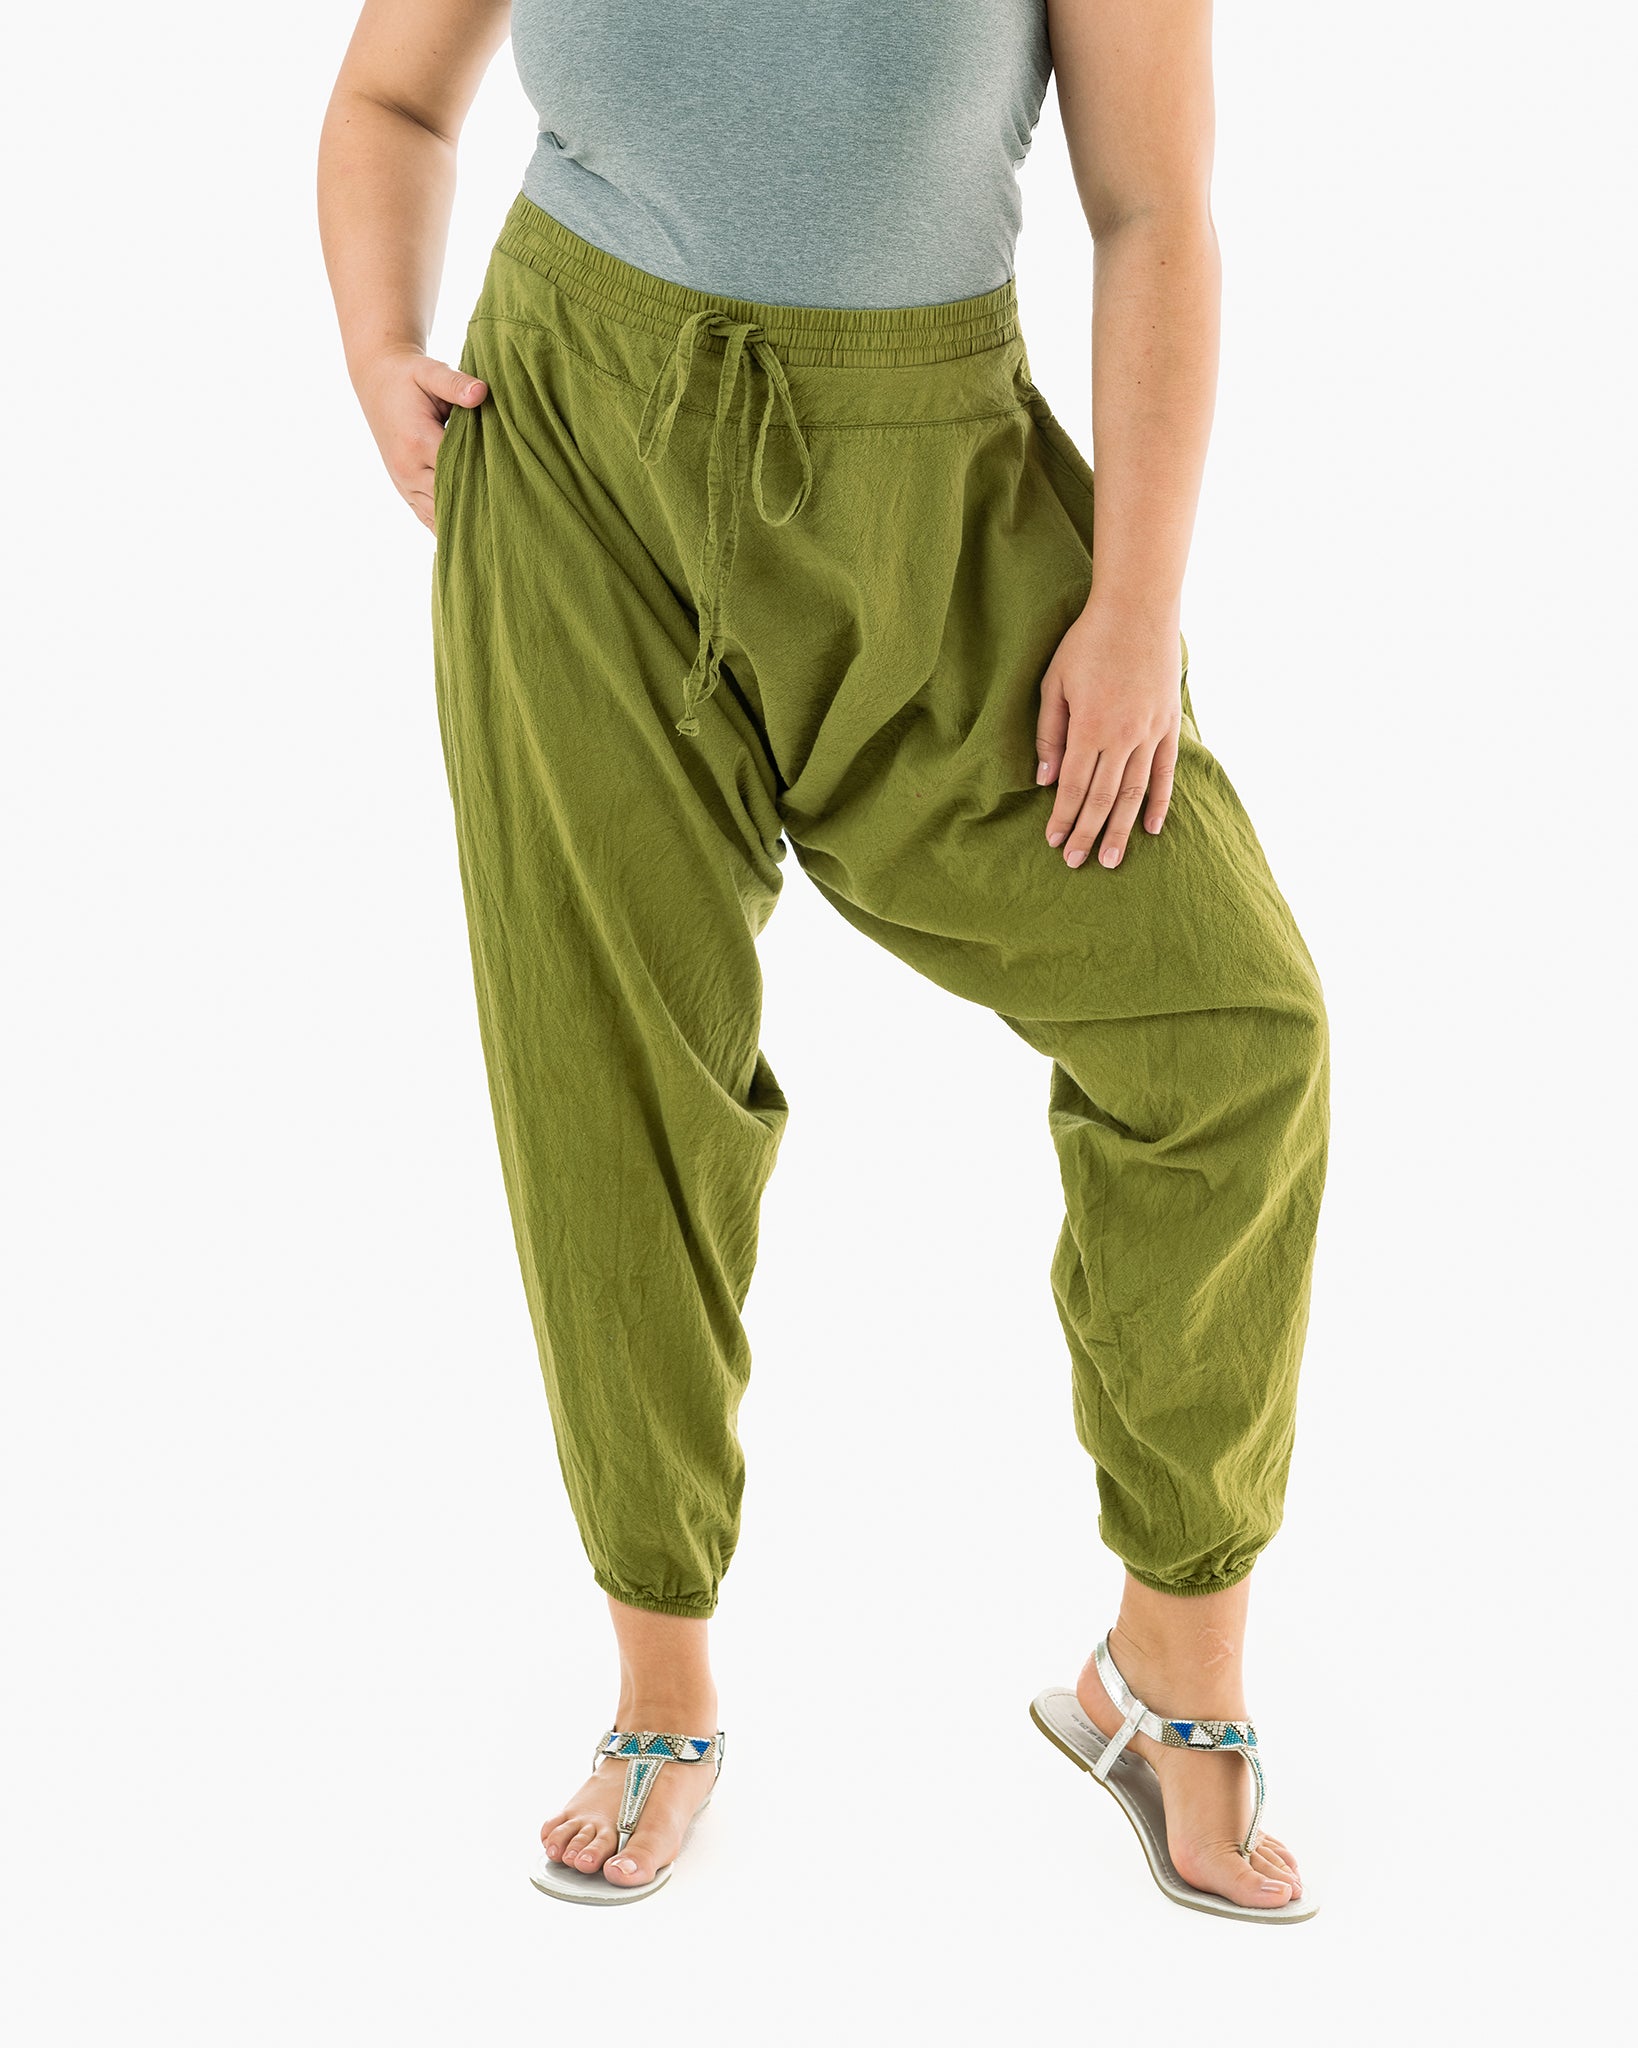 Bamboo Yoga Pants Pants Trousers Casual Women Yoga Harem Baggy